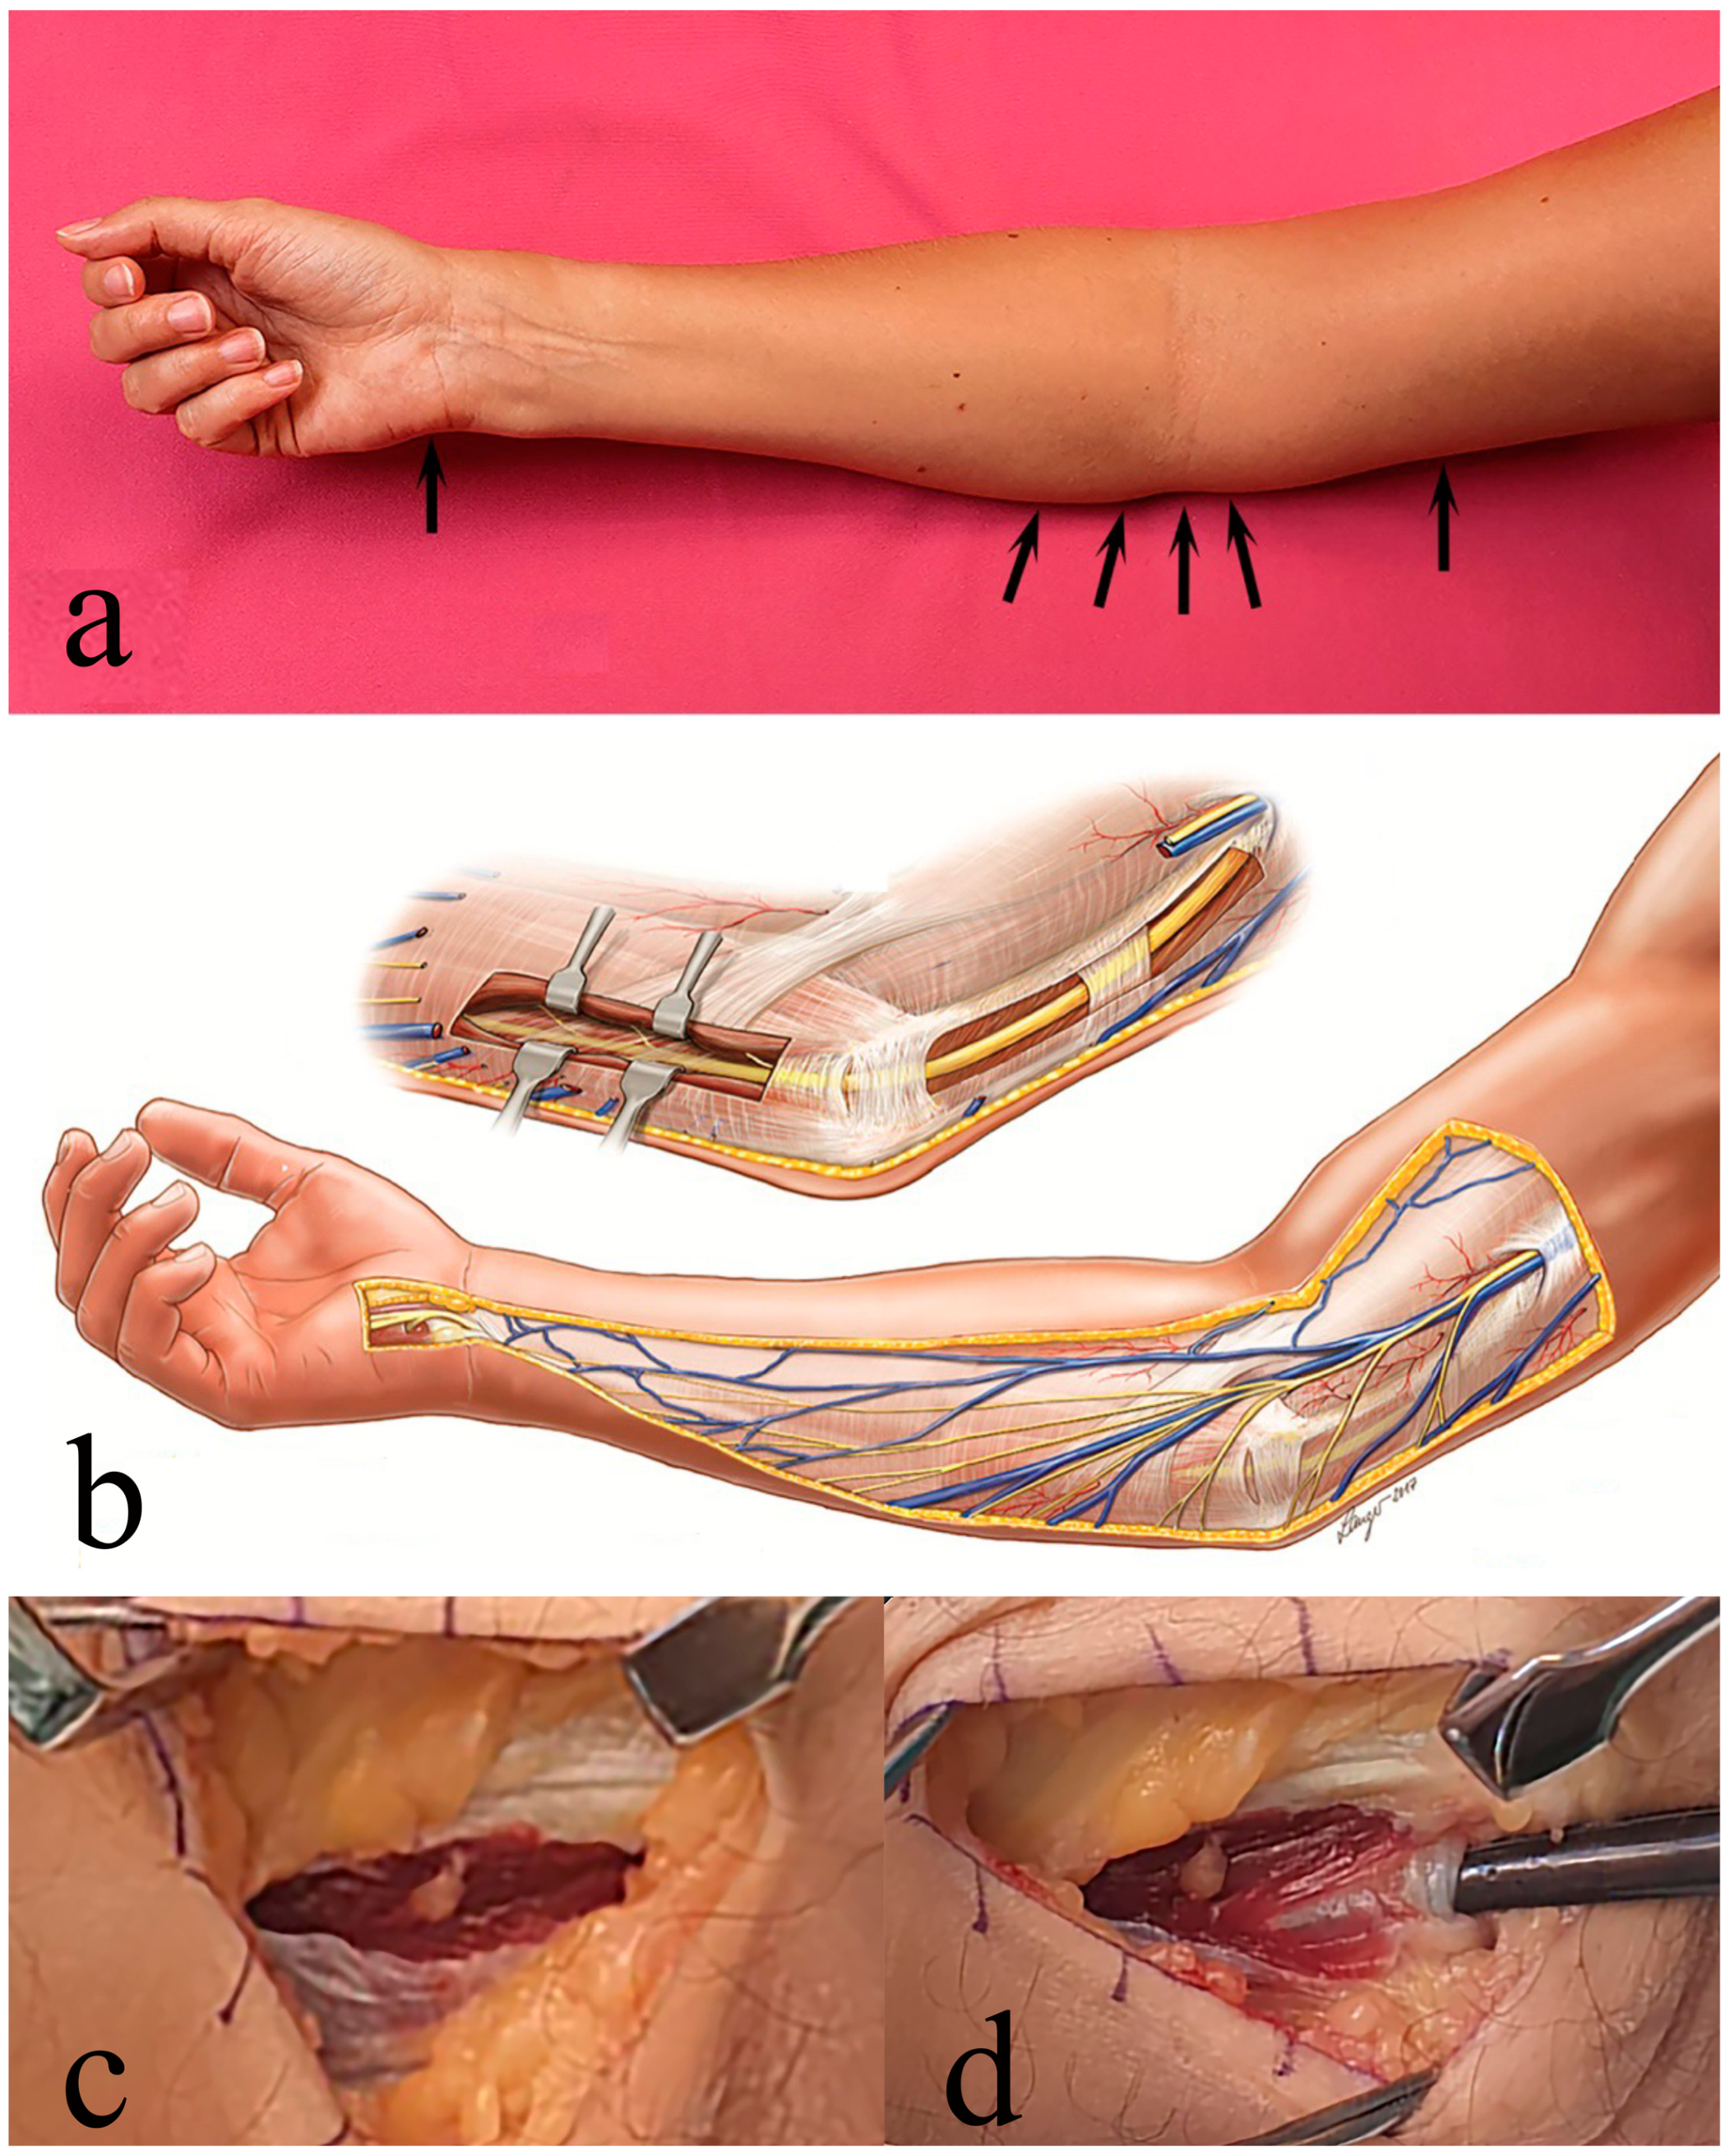 1. Potential sites of ulnar nerve compression: (1) intermuscular